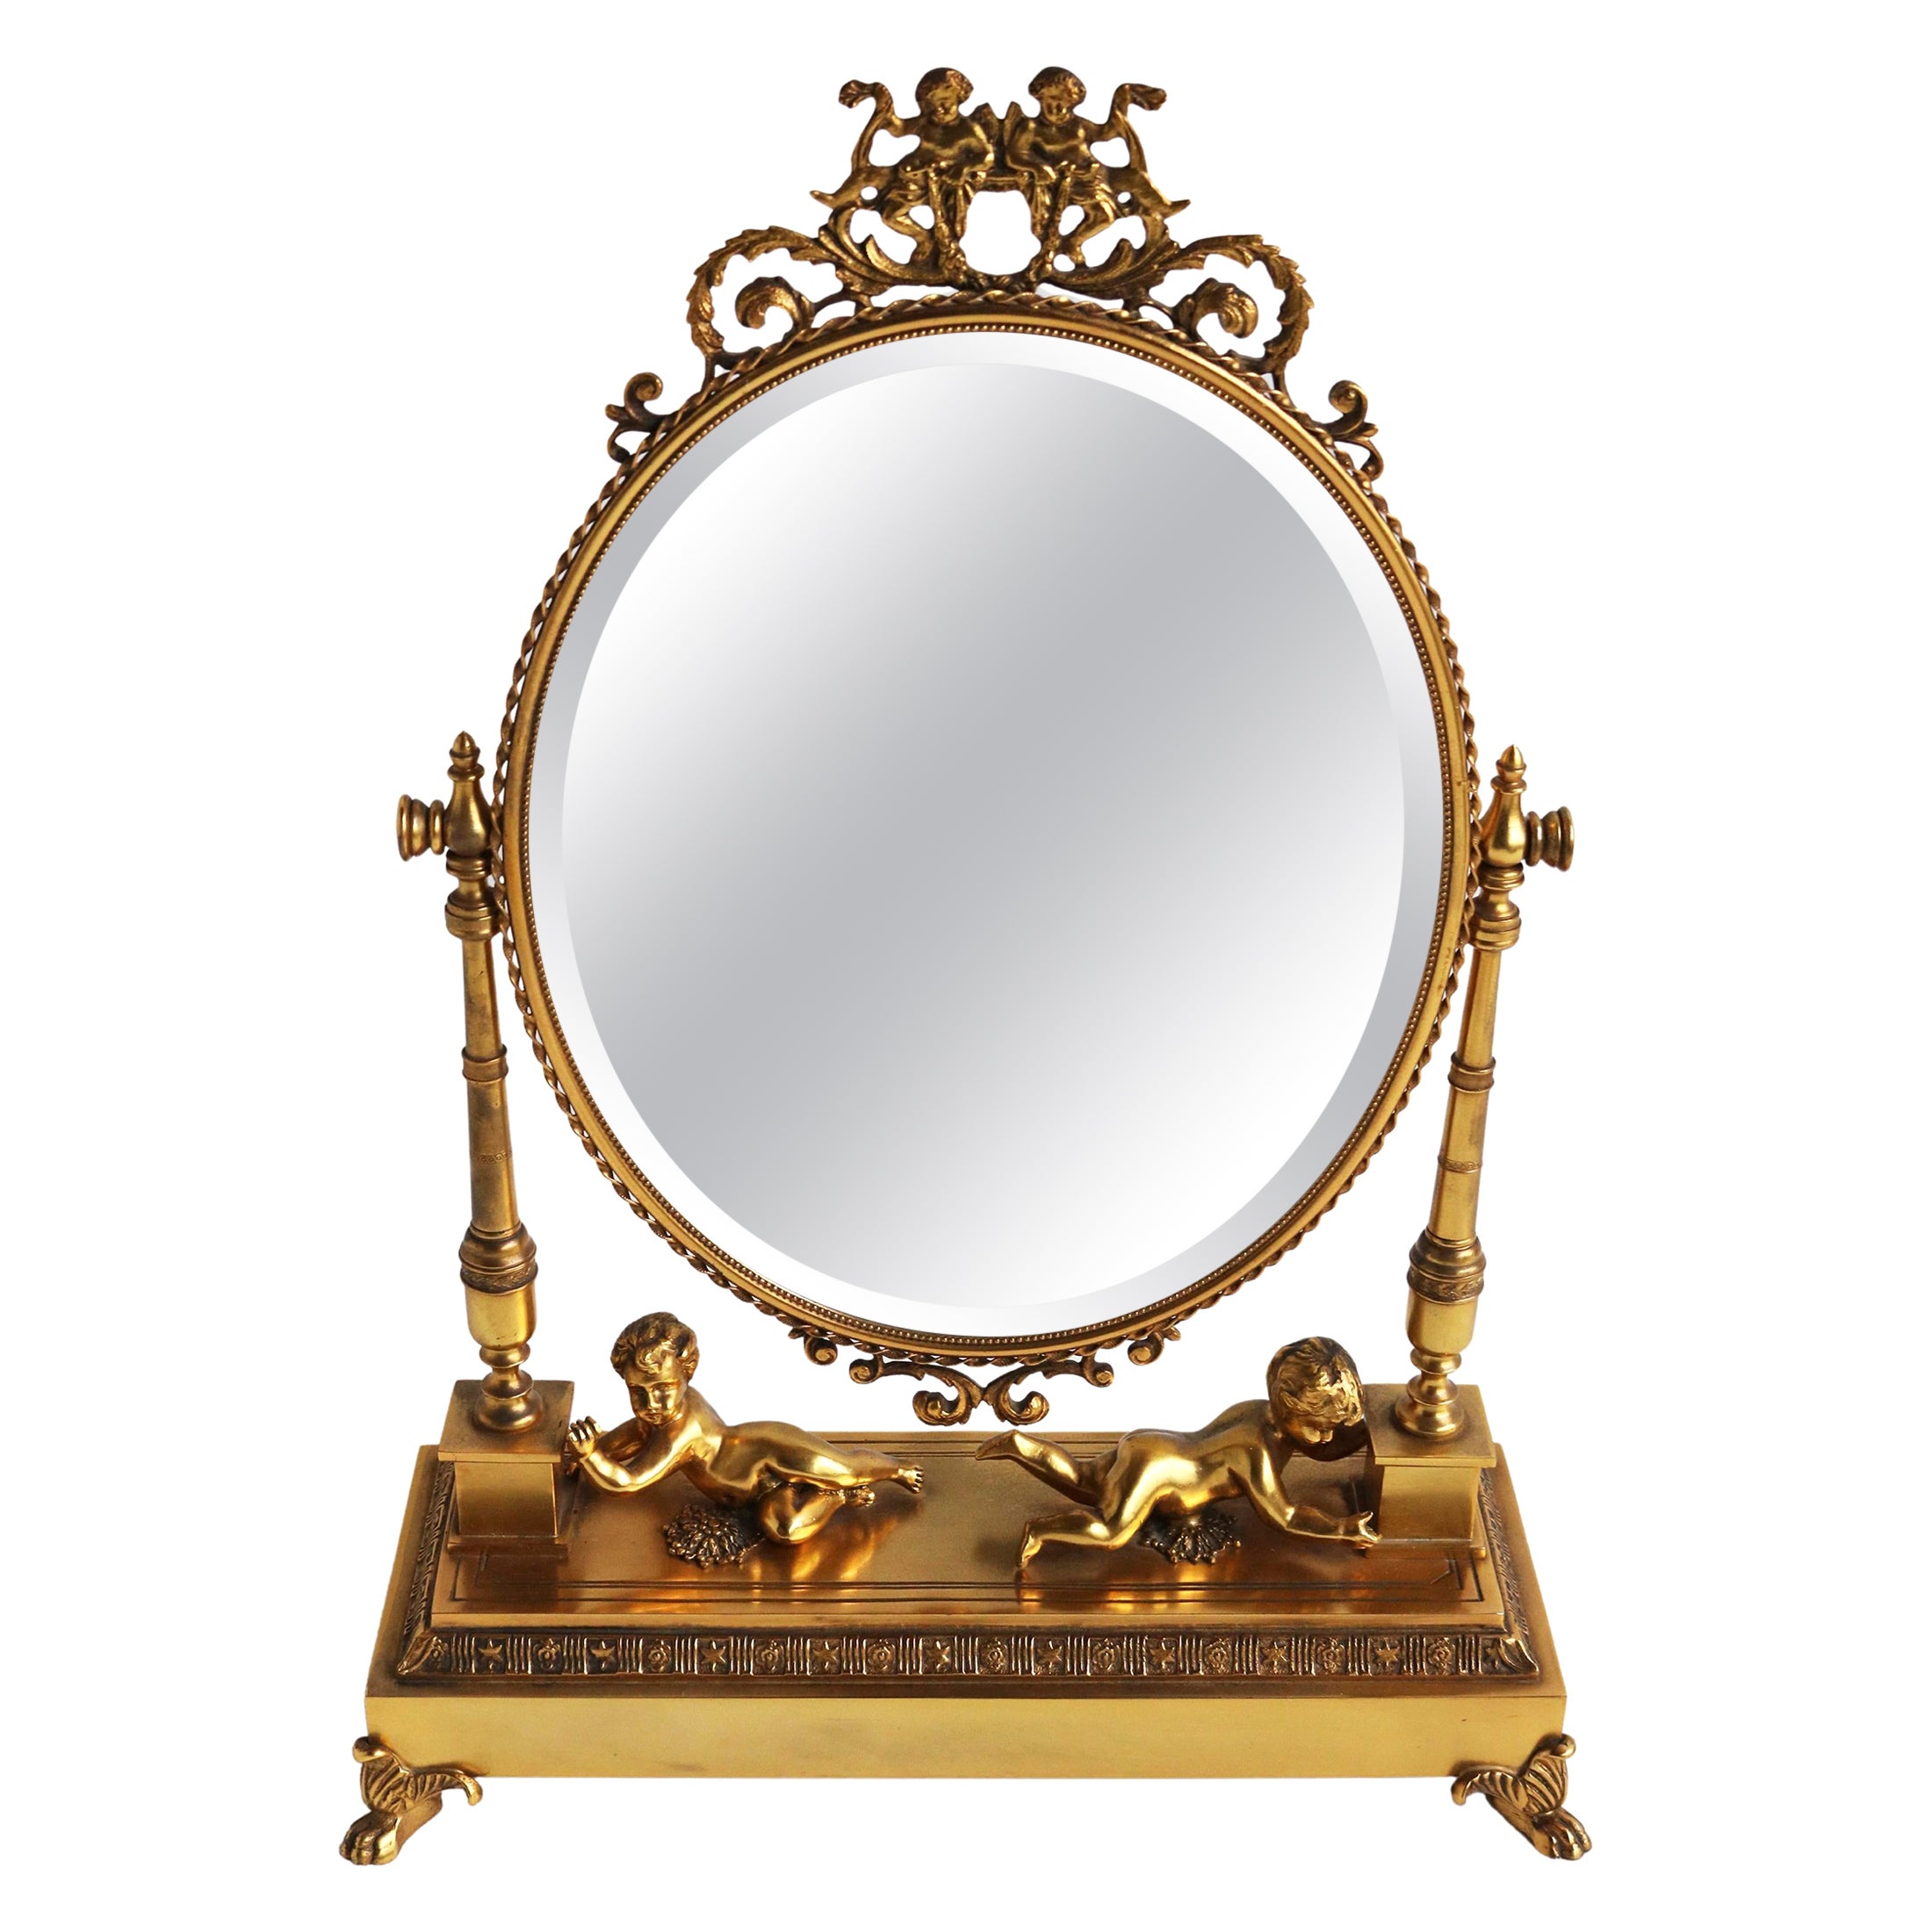 Antique Gilt Bronze Vanity Table Mirror Oval Mirror and Cherubs, circa 1900